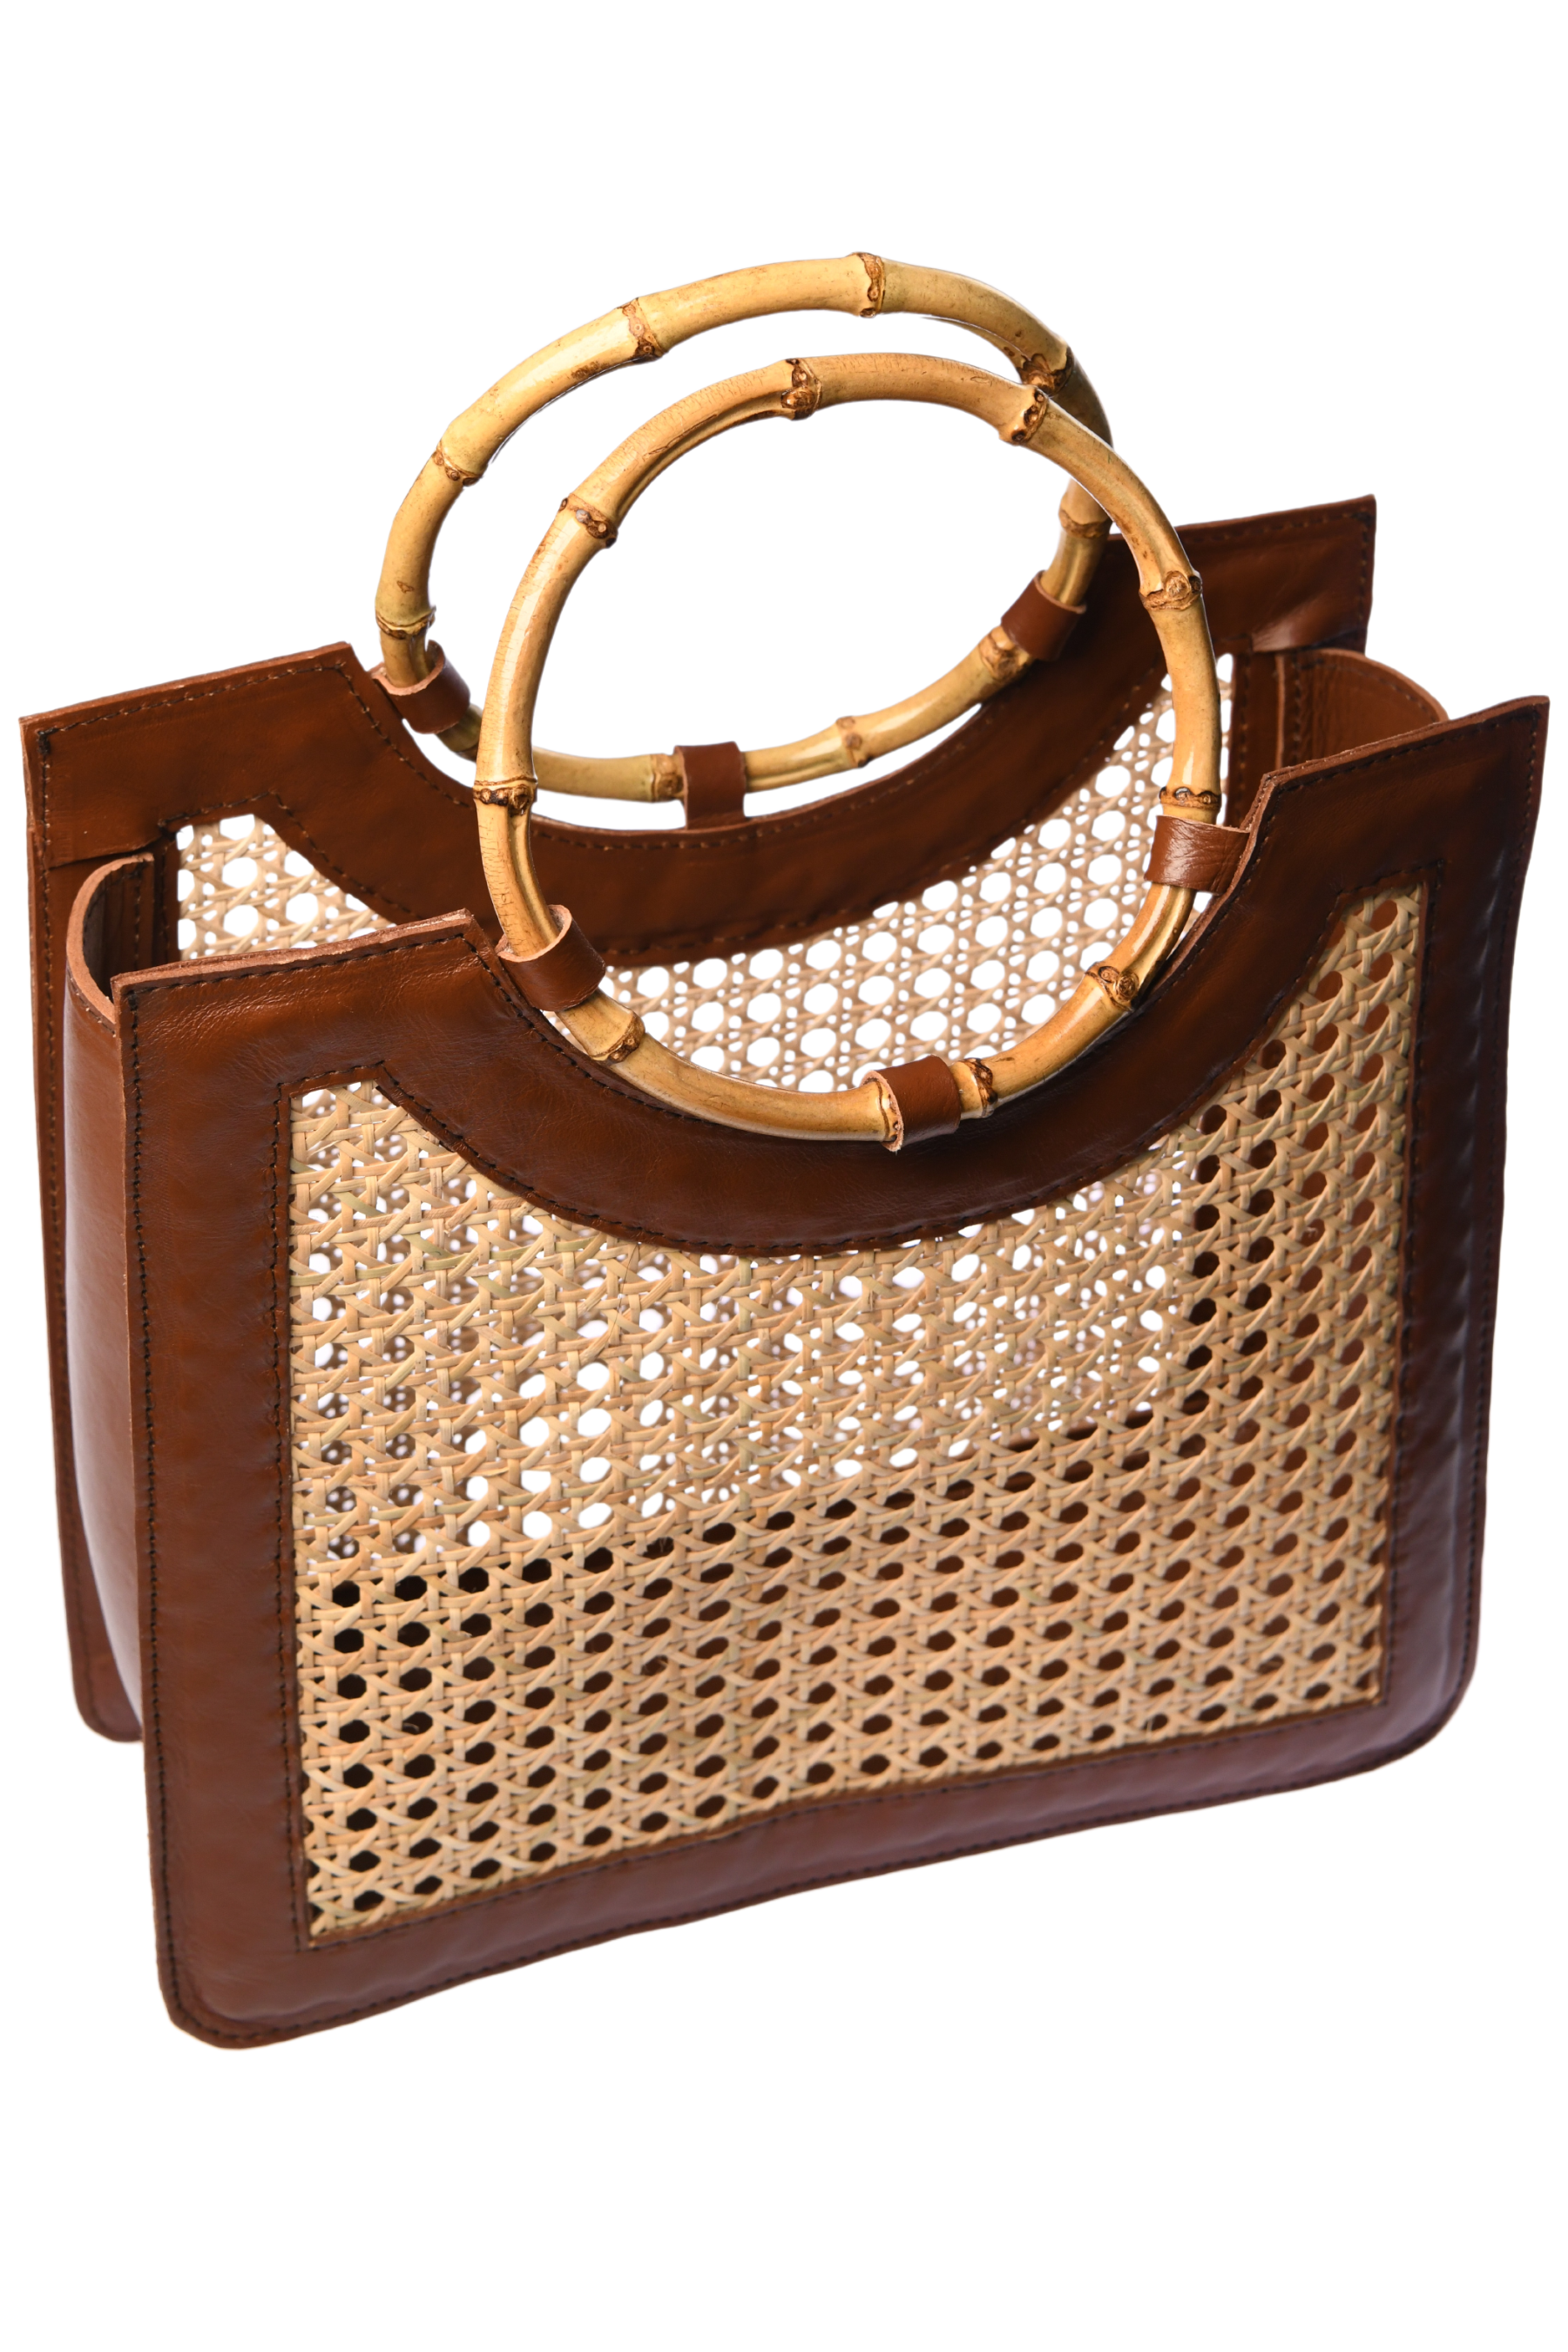 PH PandaHall 4pcs Round Wooden Handles Replacement Purse Handbag Handle for  Handmade Beach Bag Handbags Straw Bag Purse Handles : Amazon.in: Shoes &  Handbags